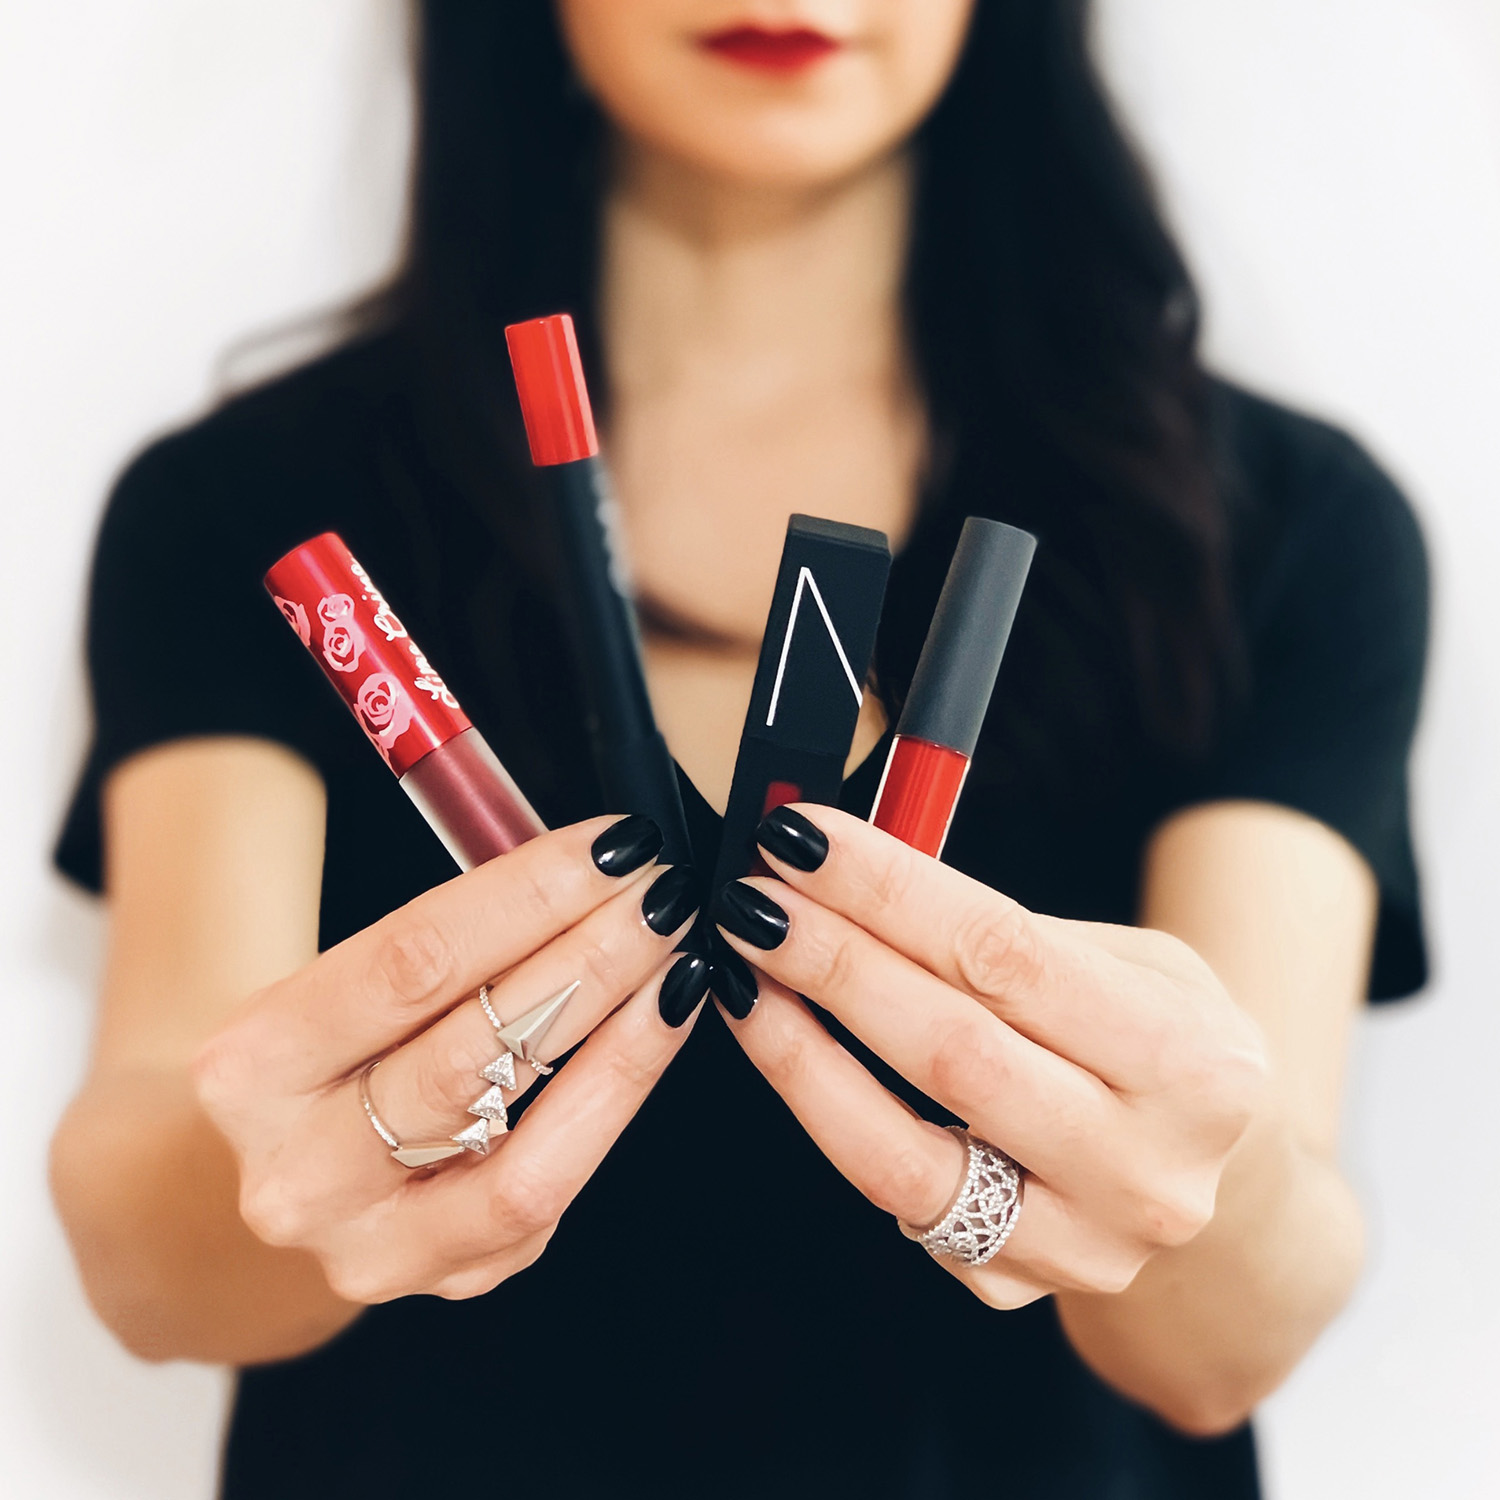 My Favorite Red Lipsticks